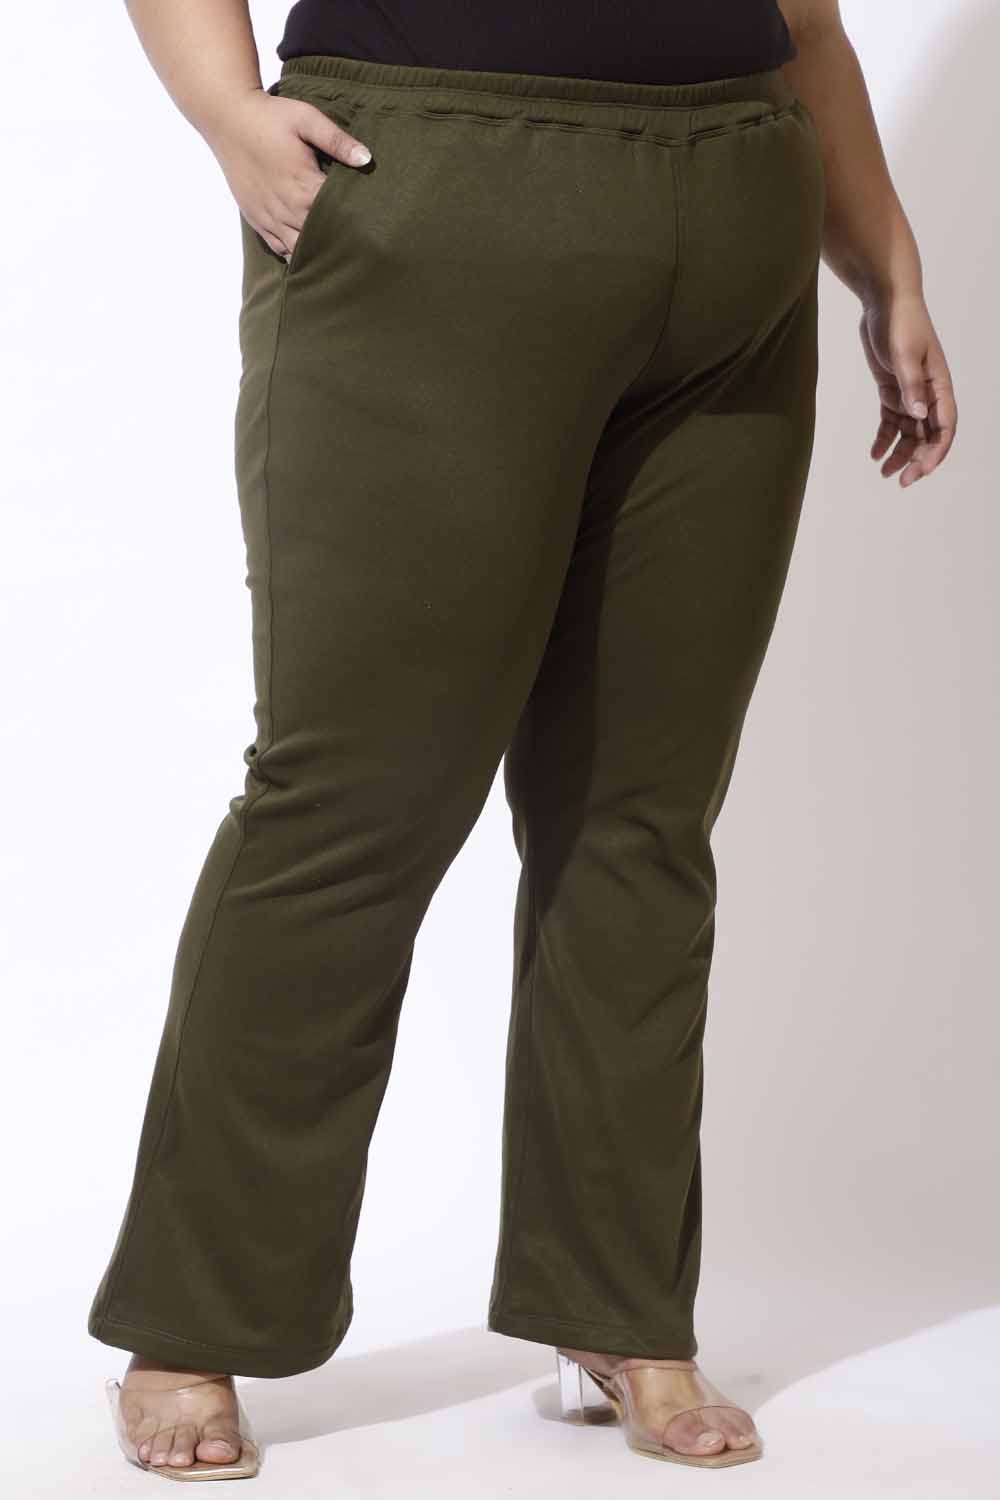 Comfortable Plus Size Olive Bootcut Fleece Pants